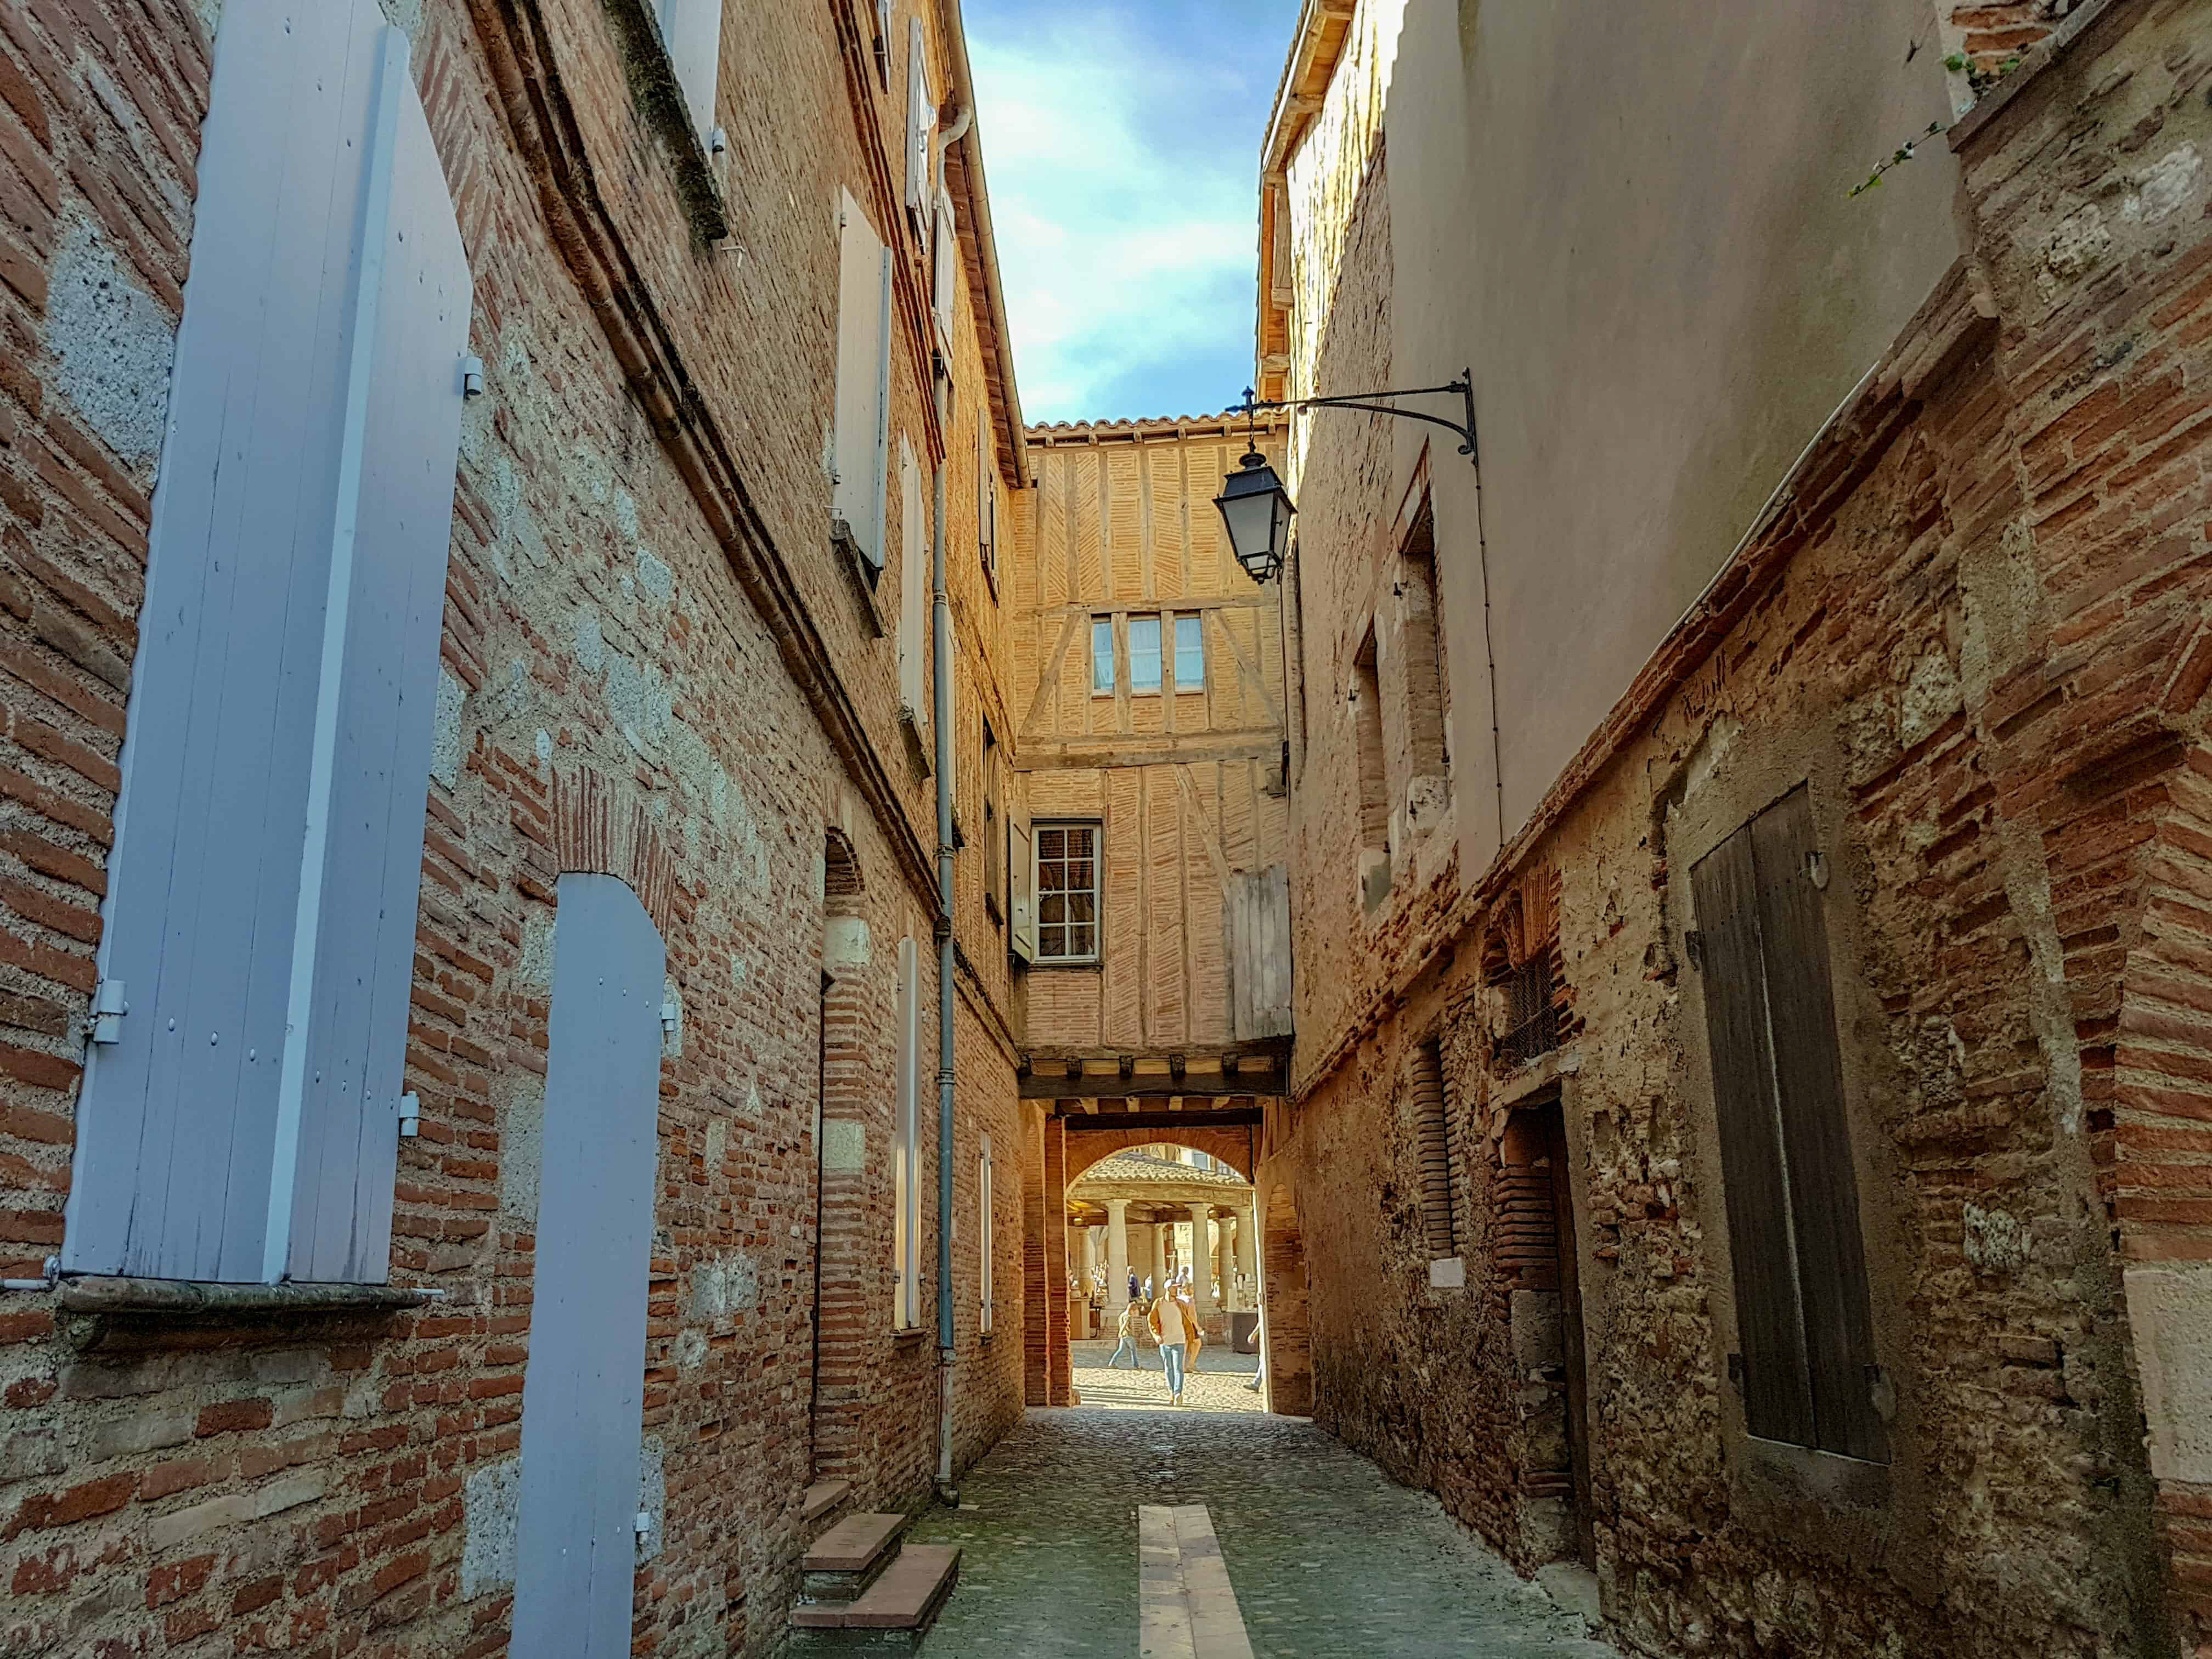 A walk via the 15th century buildings